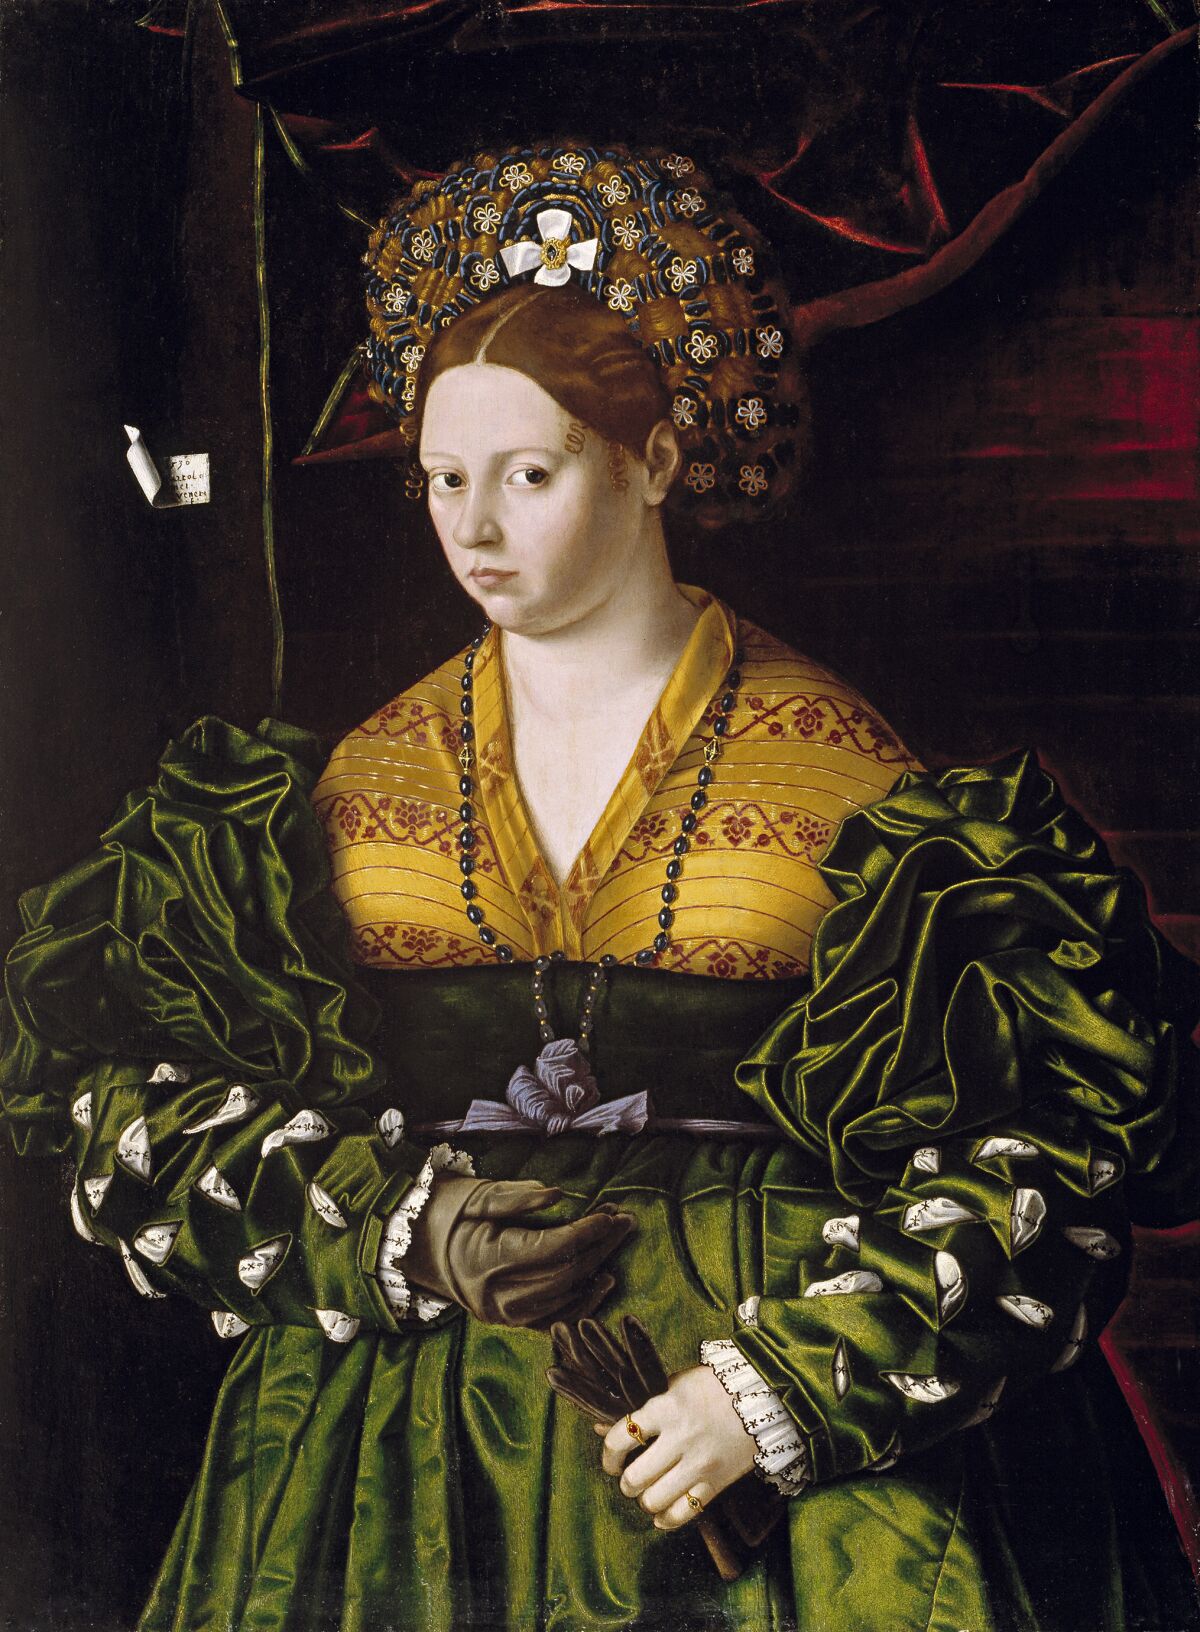 Bartolomeo Veneto: “Woman in a Green Dress” (1530)